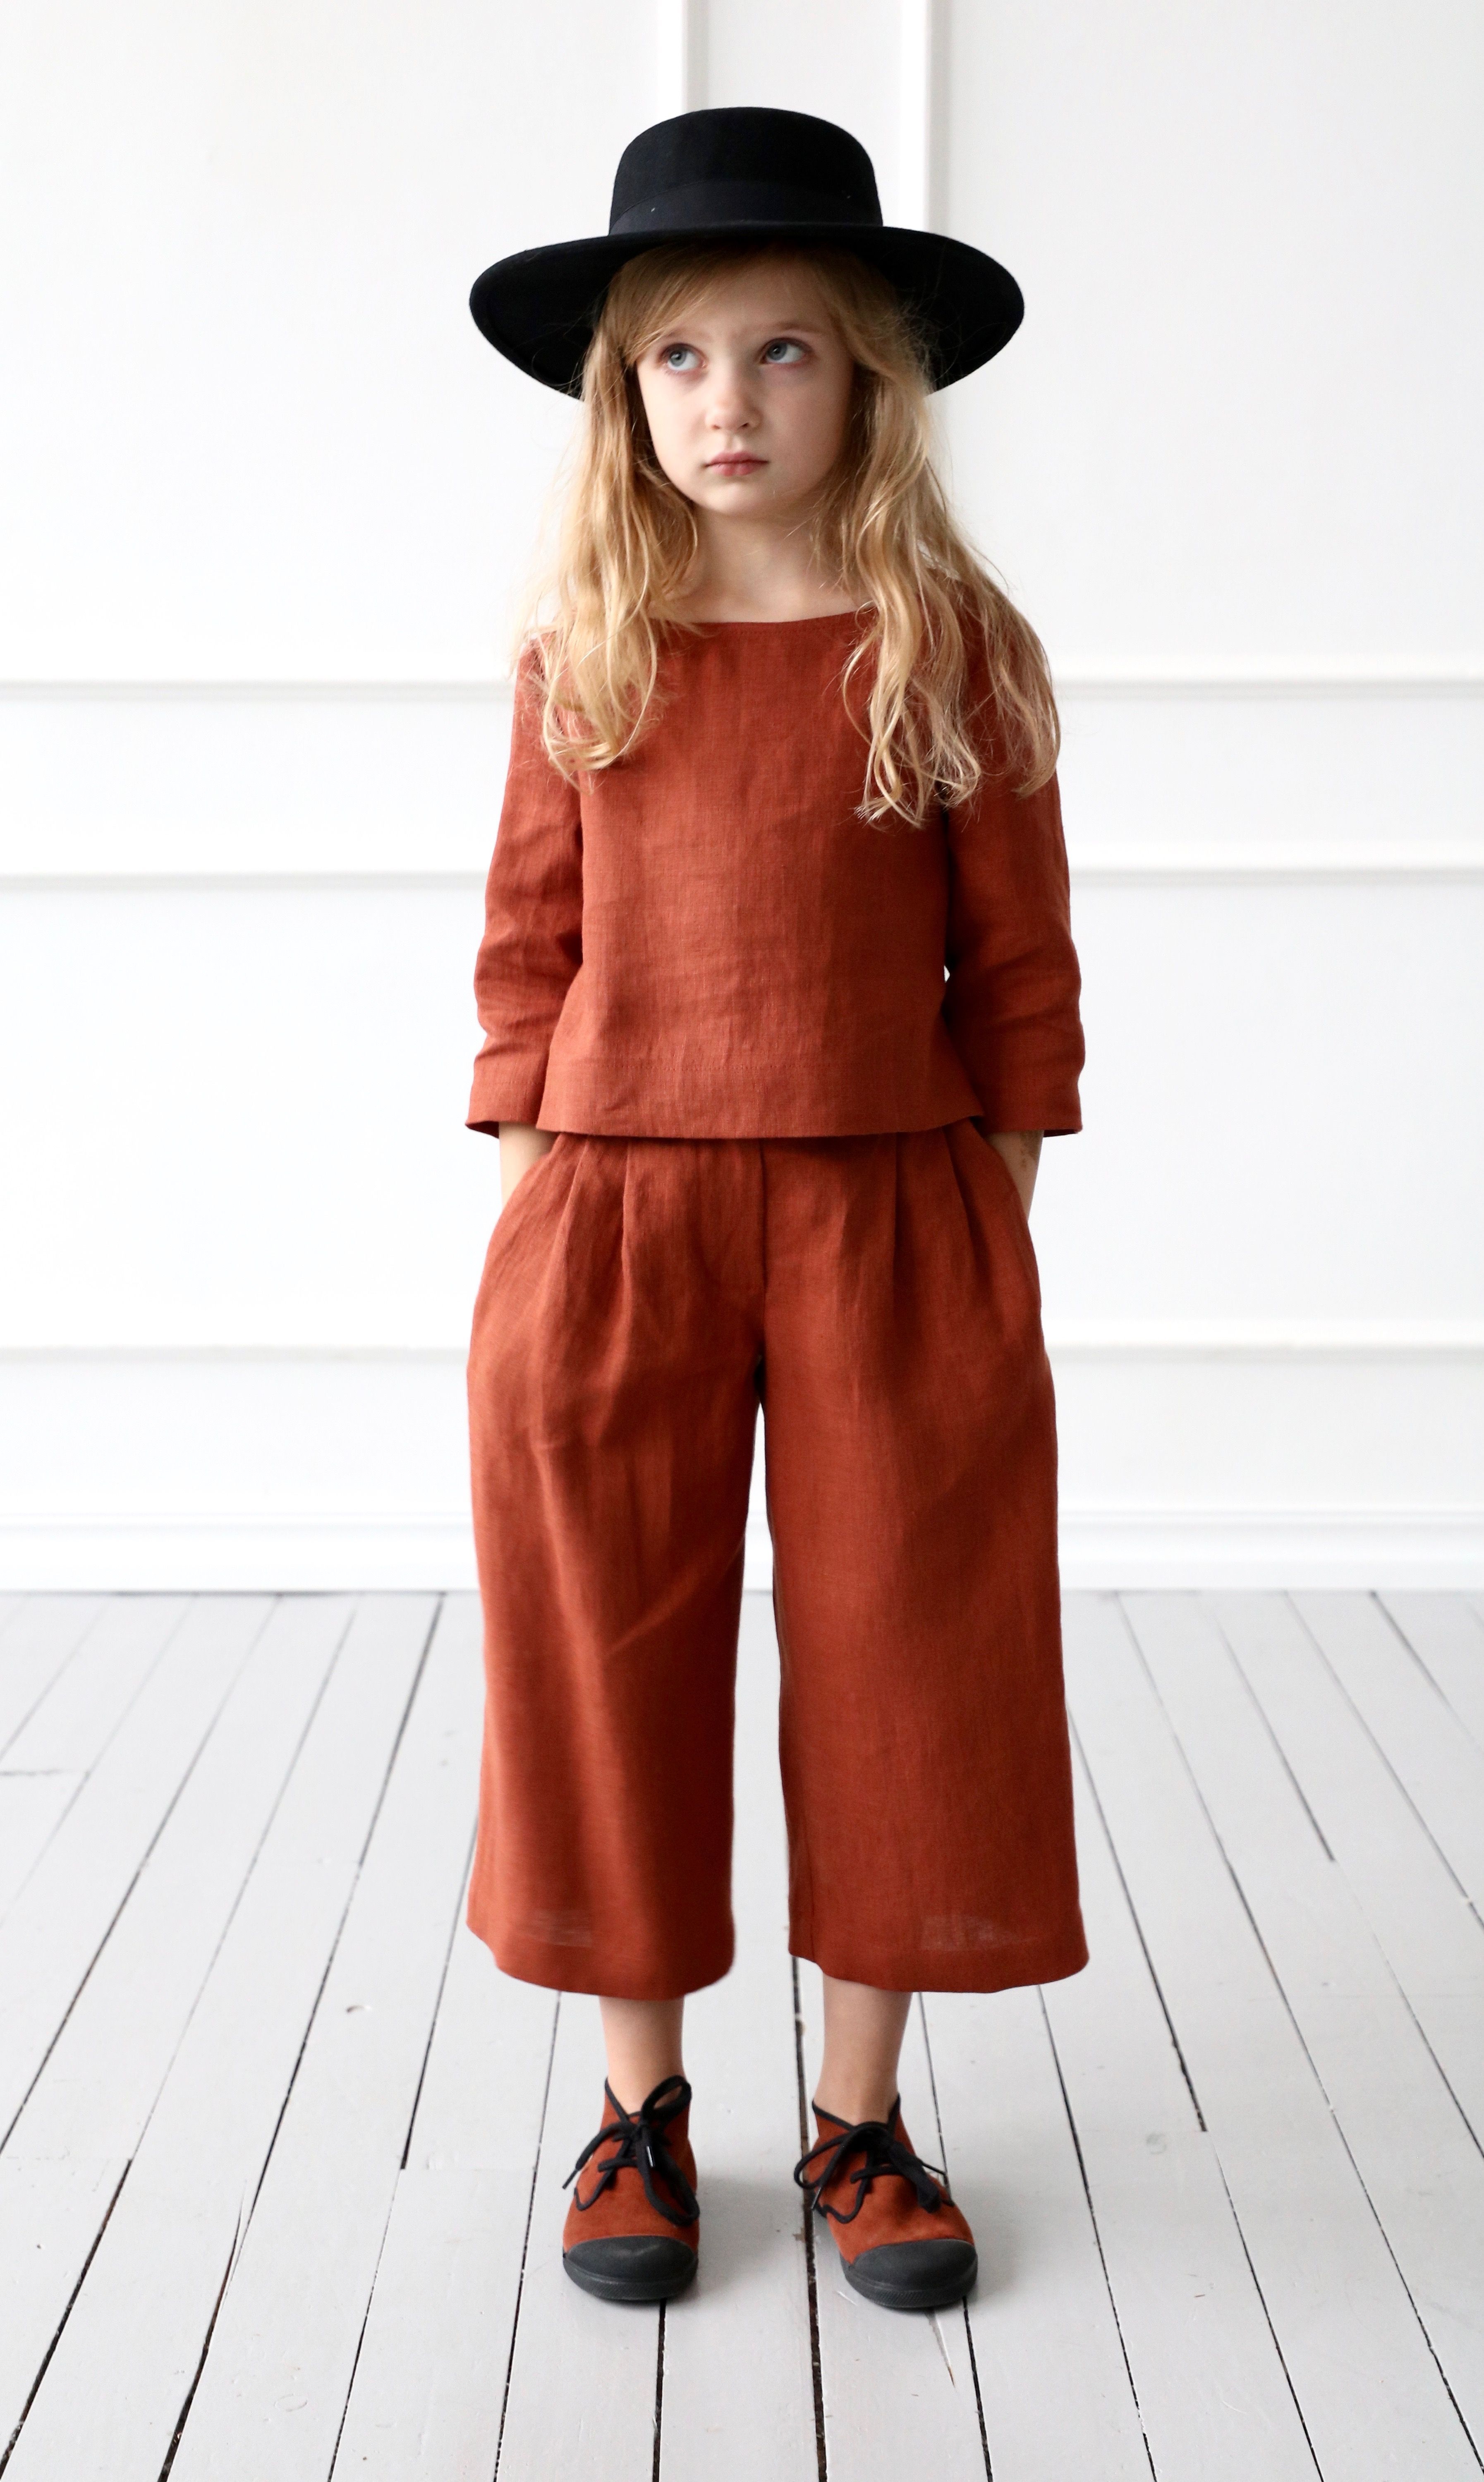 19 DIY Clothes For Kids dresses
 ideas